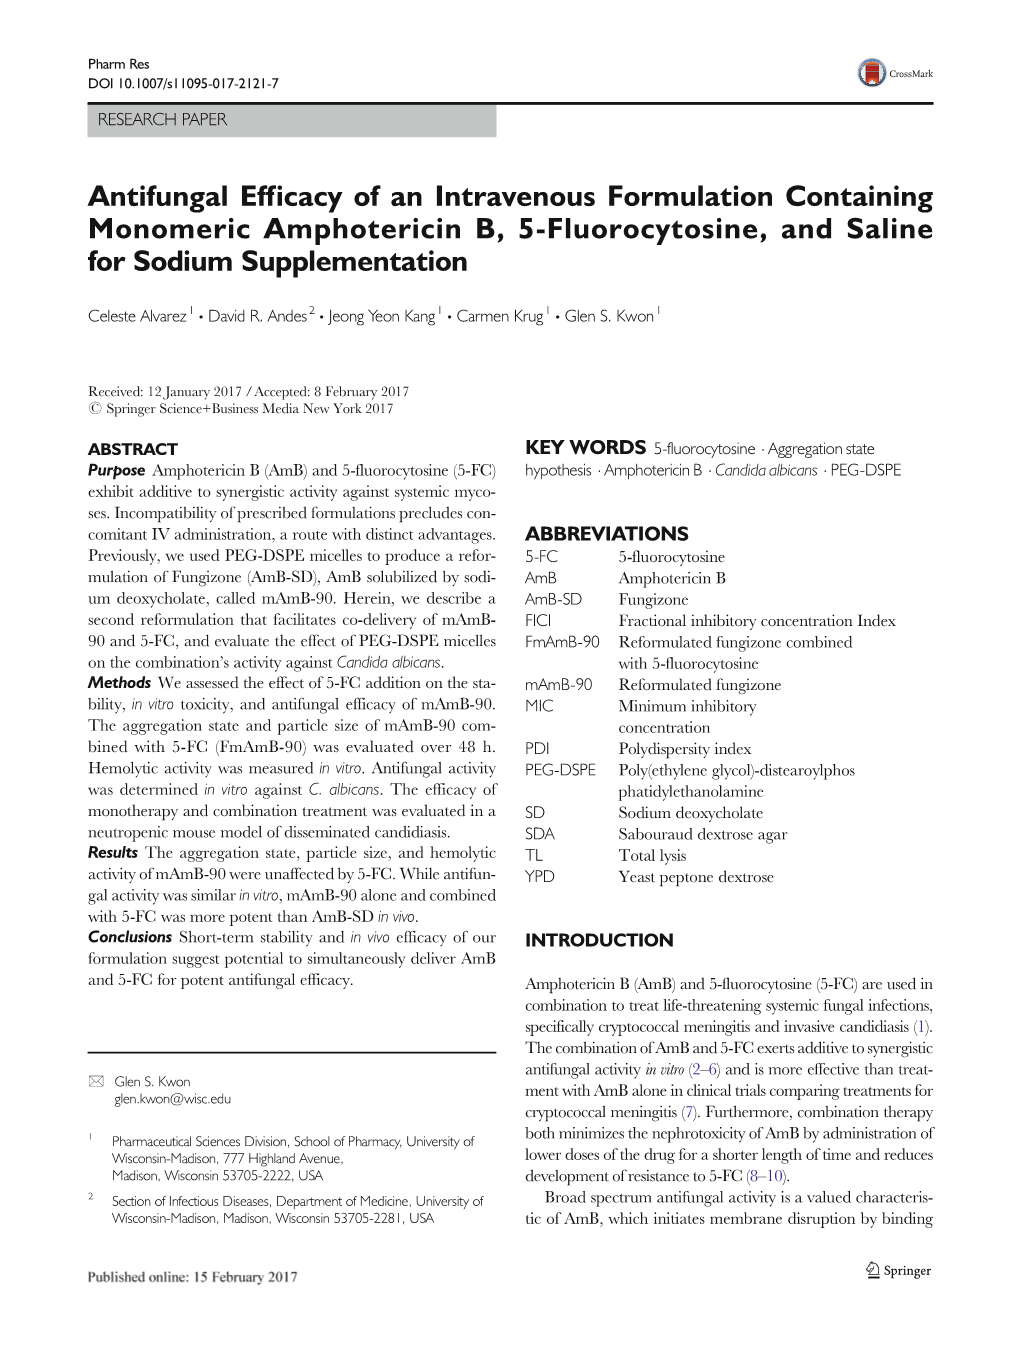 Antifungal Efficacy of an Intravenous Formulation Containing Monomeric Amphotericin B, 5-Fluorocytosine, and Saline for Sodium Supplementation